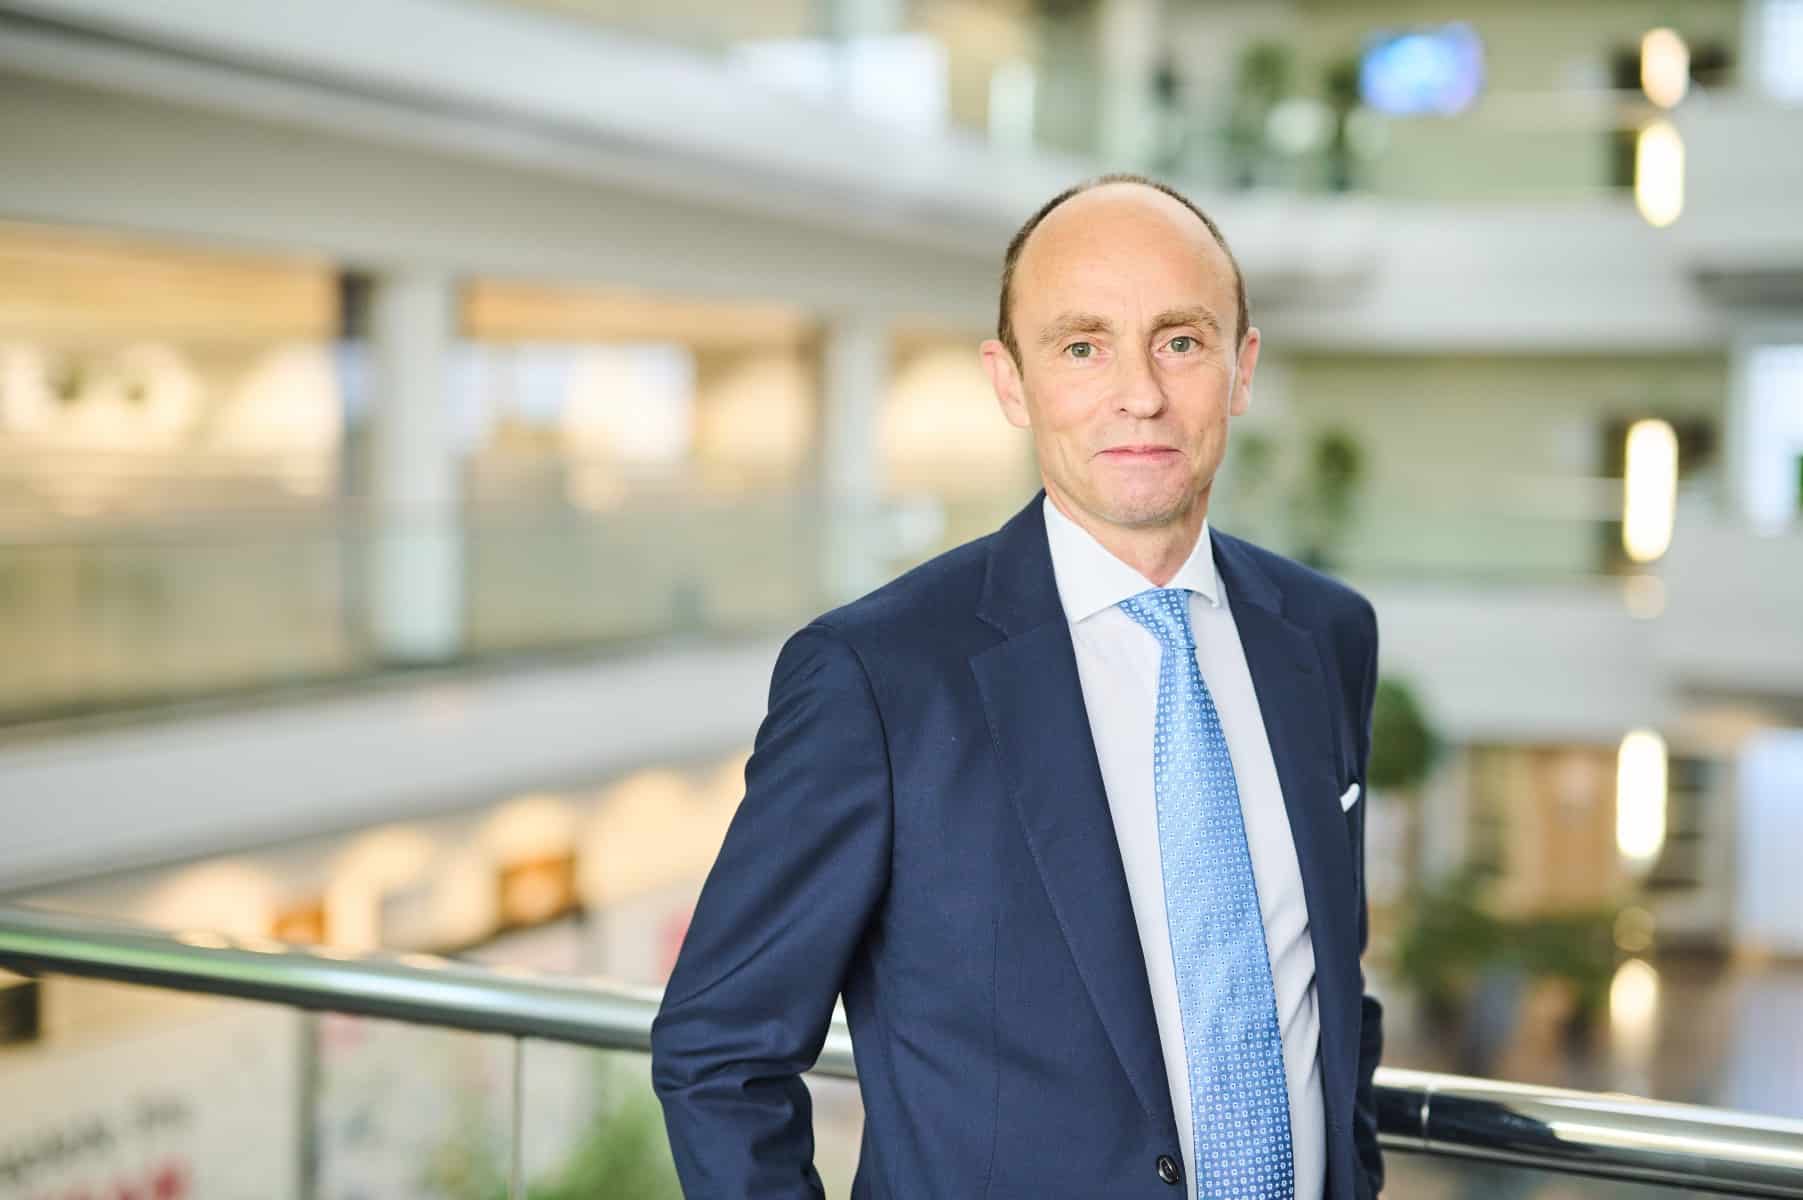 Matt Harrison, Chief Corporate Officer at Toyota Motor Europe